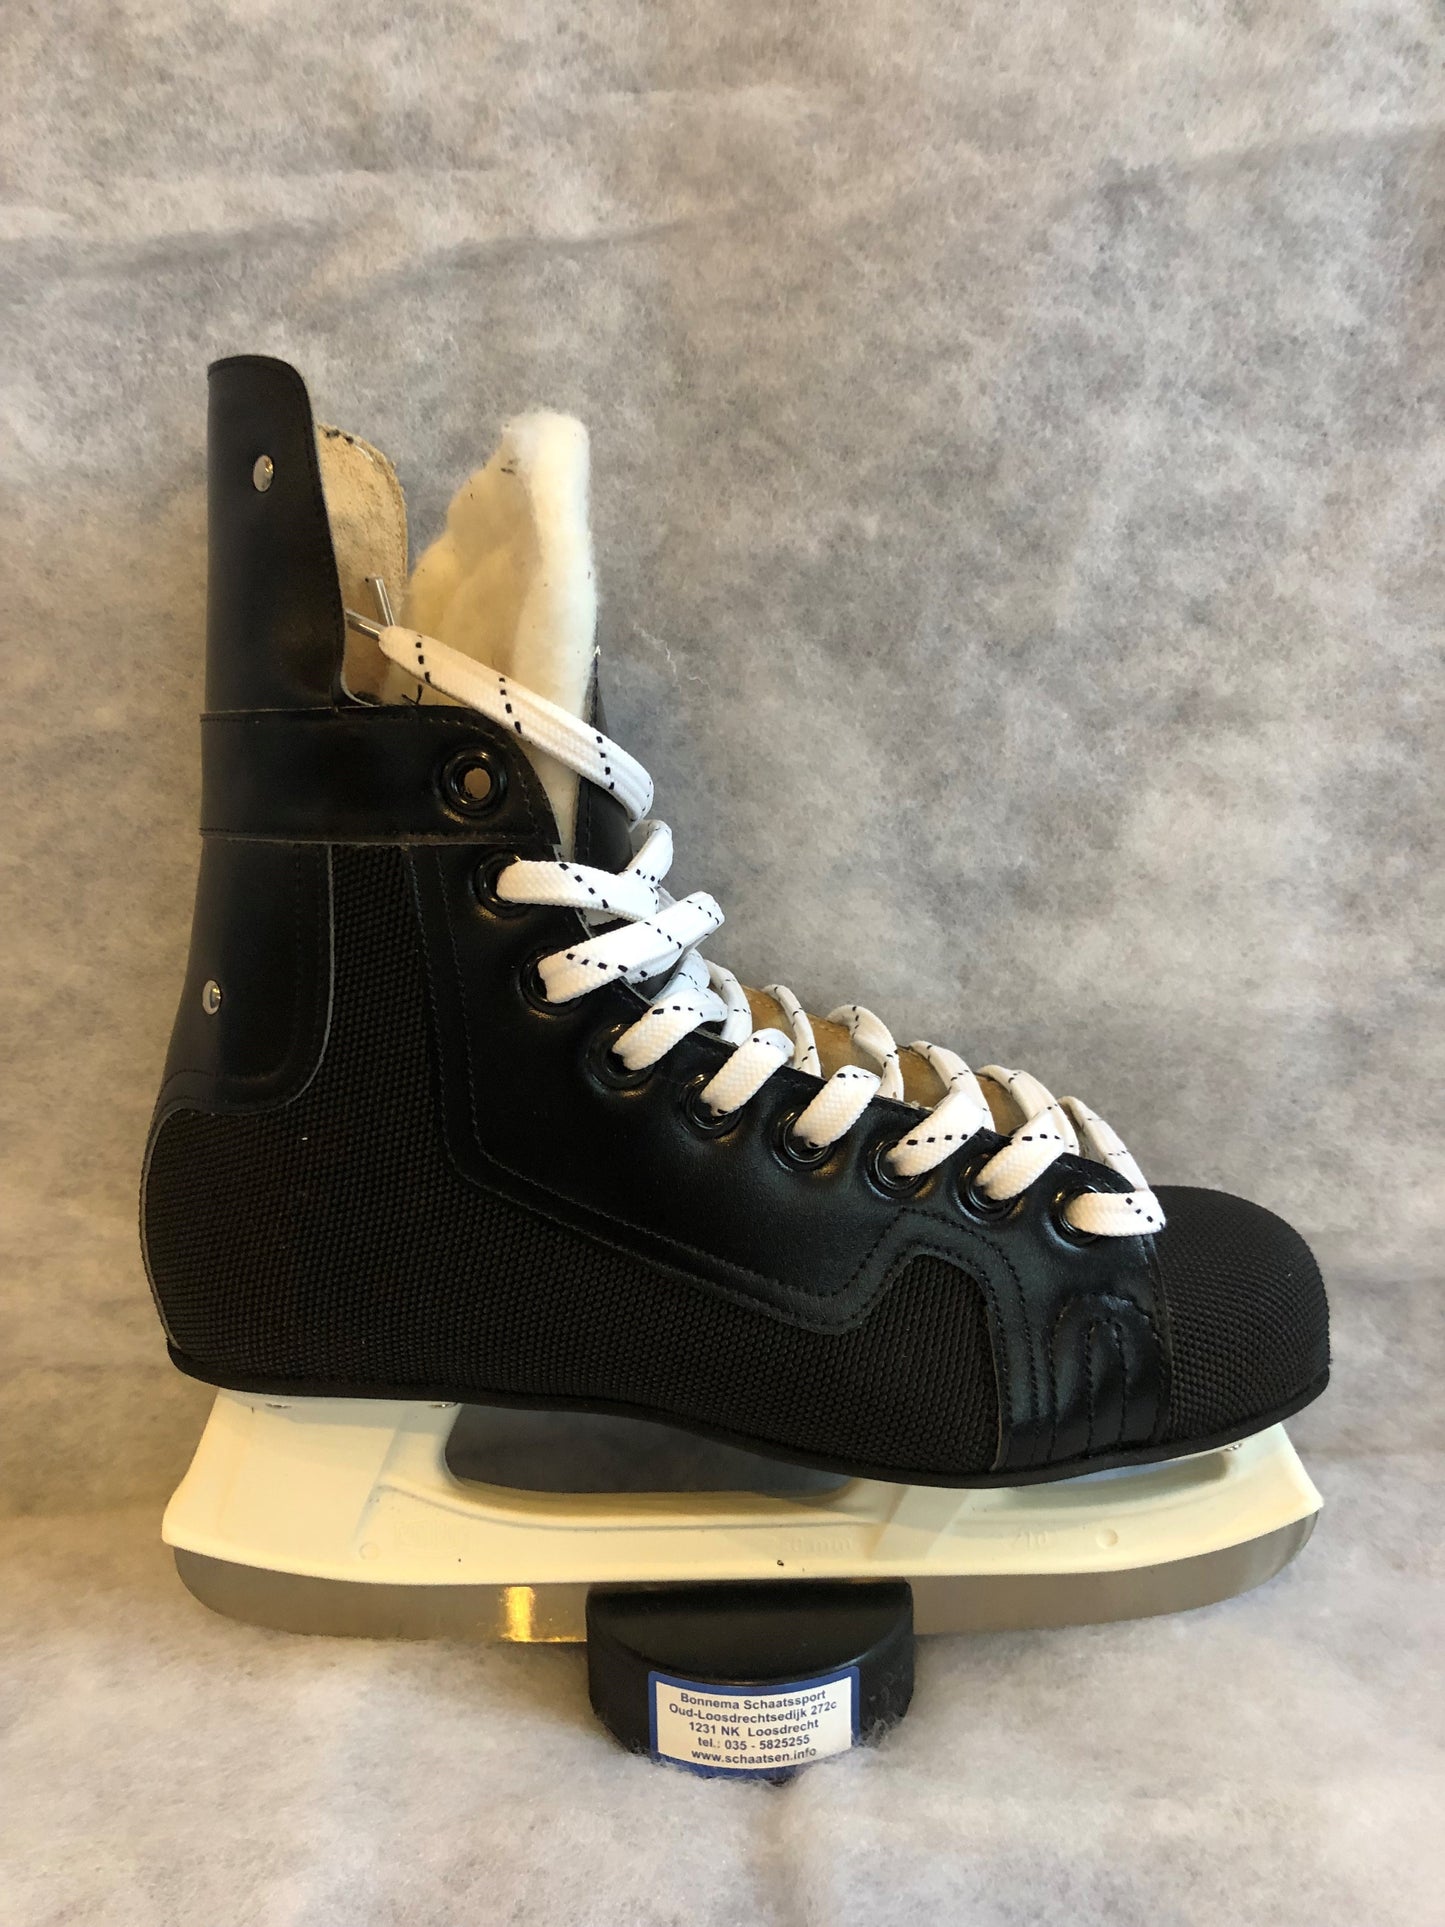 Hockeyschaats Toronto 710